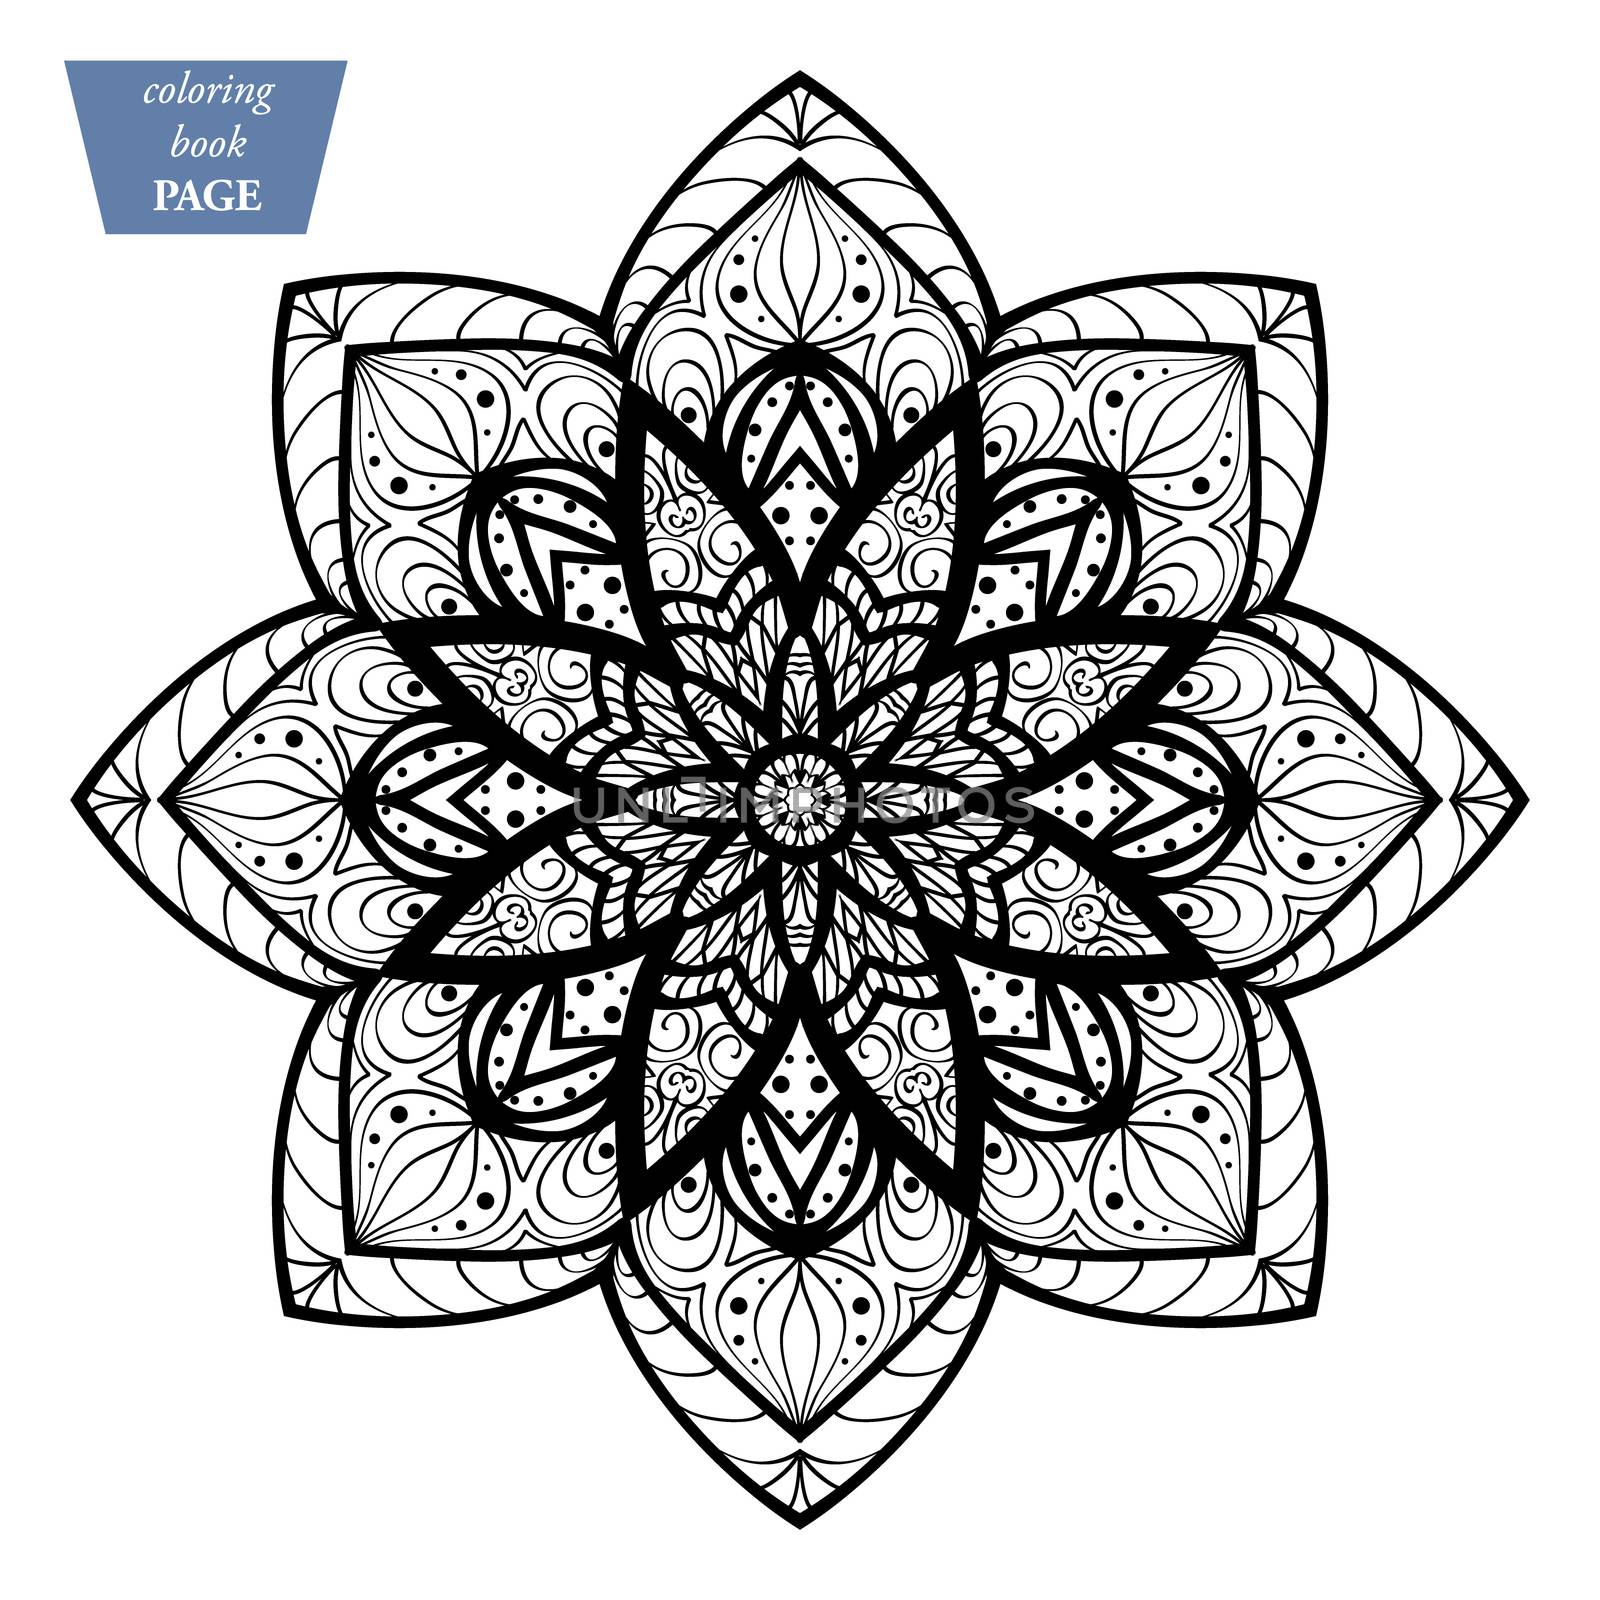 Mandala. Coloring page. Vintage decorative elements. Oriental pattern, vector illustration c by VeekSegal